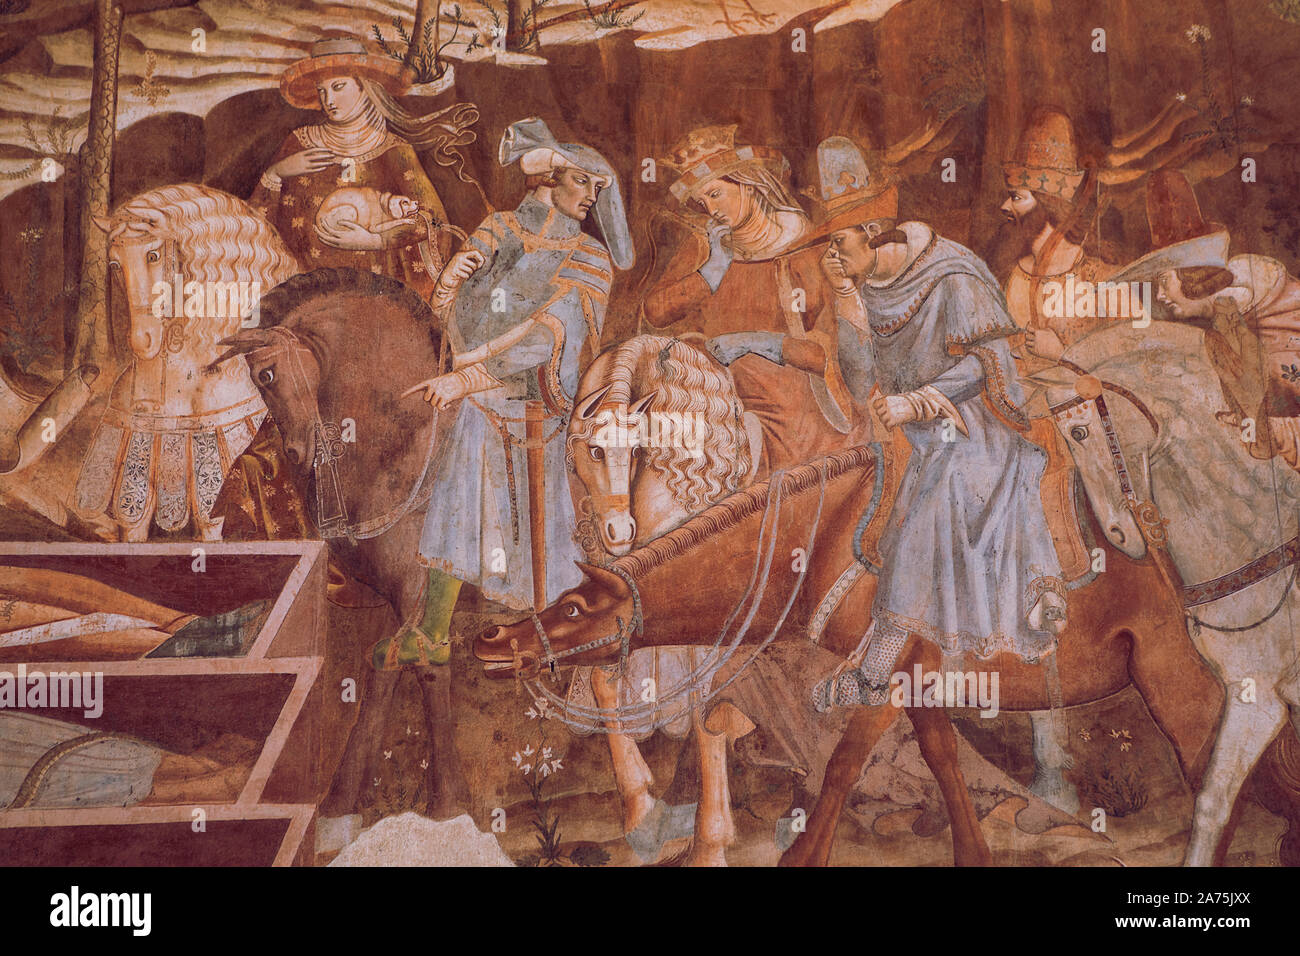 Detail of italian fresco 'Triumph of Death', 'Last Judgement' by Buonamico Buffalmacco, 1336-1341, renovated fresco inside the Campo Santo, Pisa Ital Stock Photo